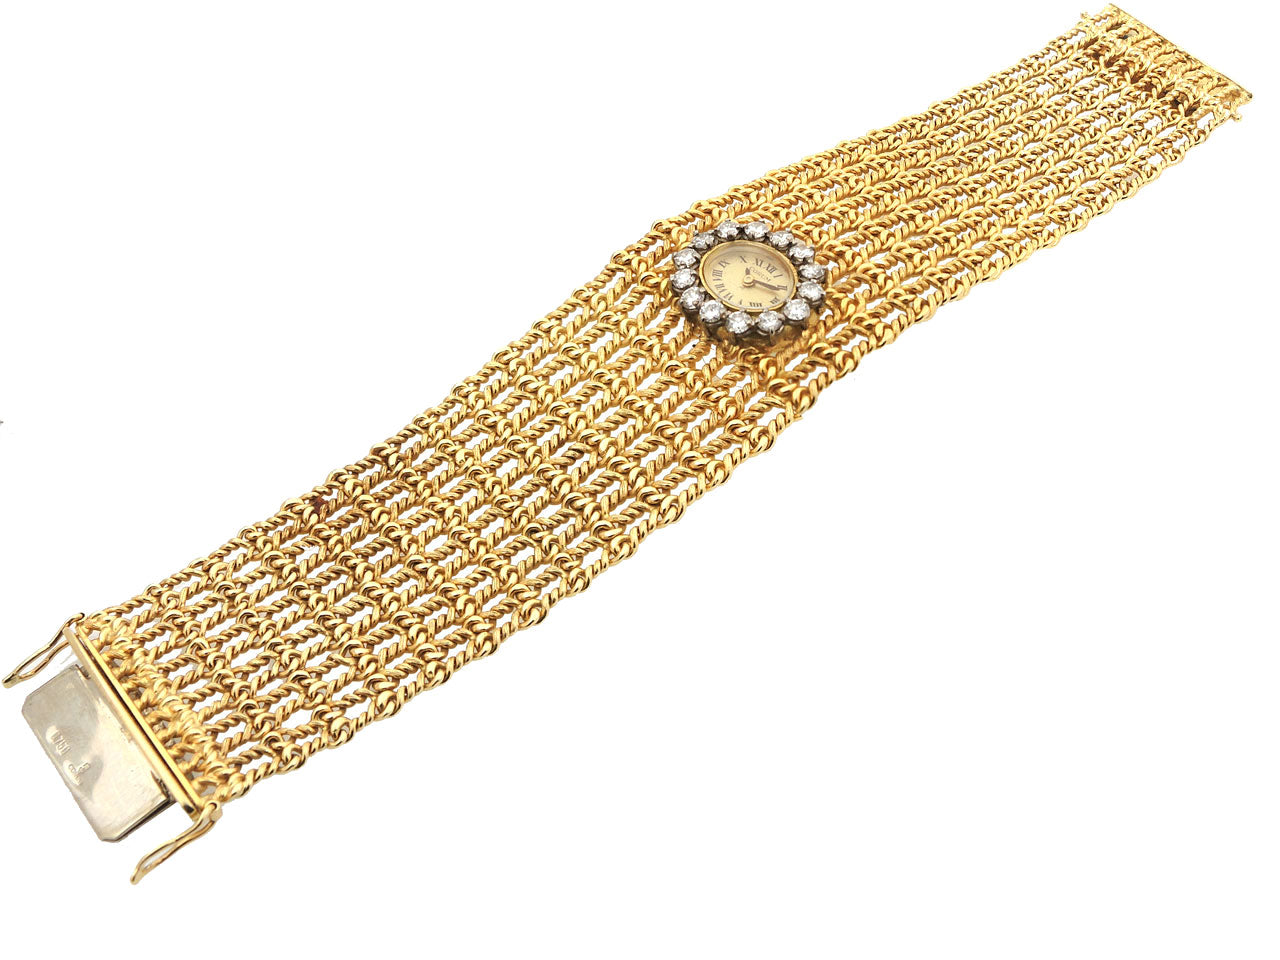 Vintage Corum Ladies Diamonds Watch in 18K Gold